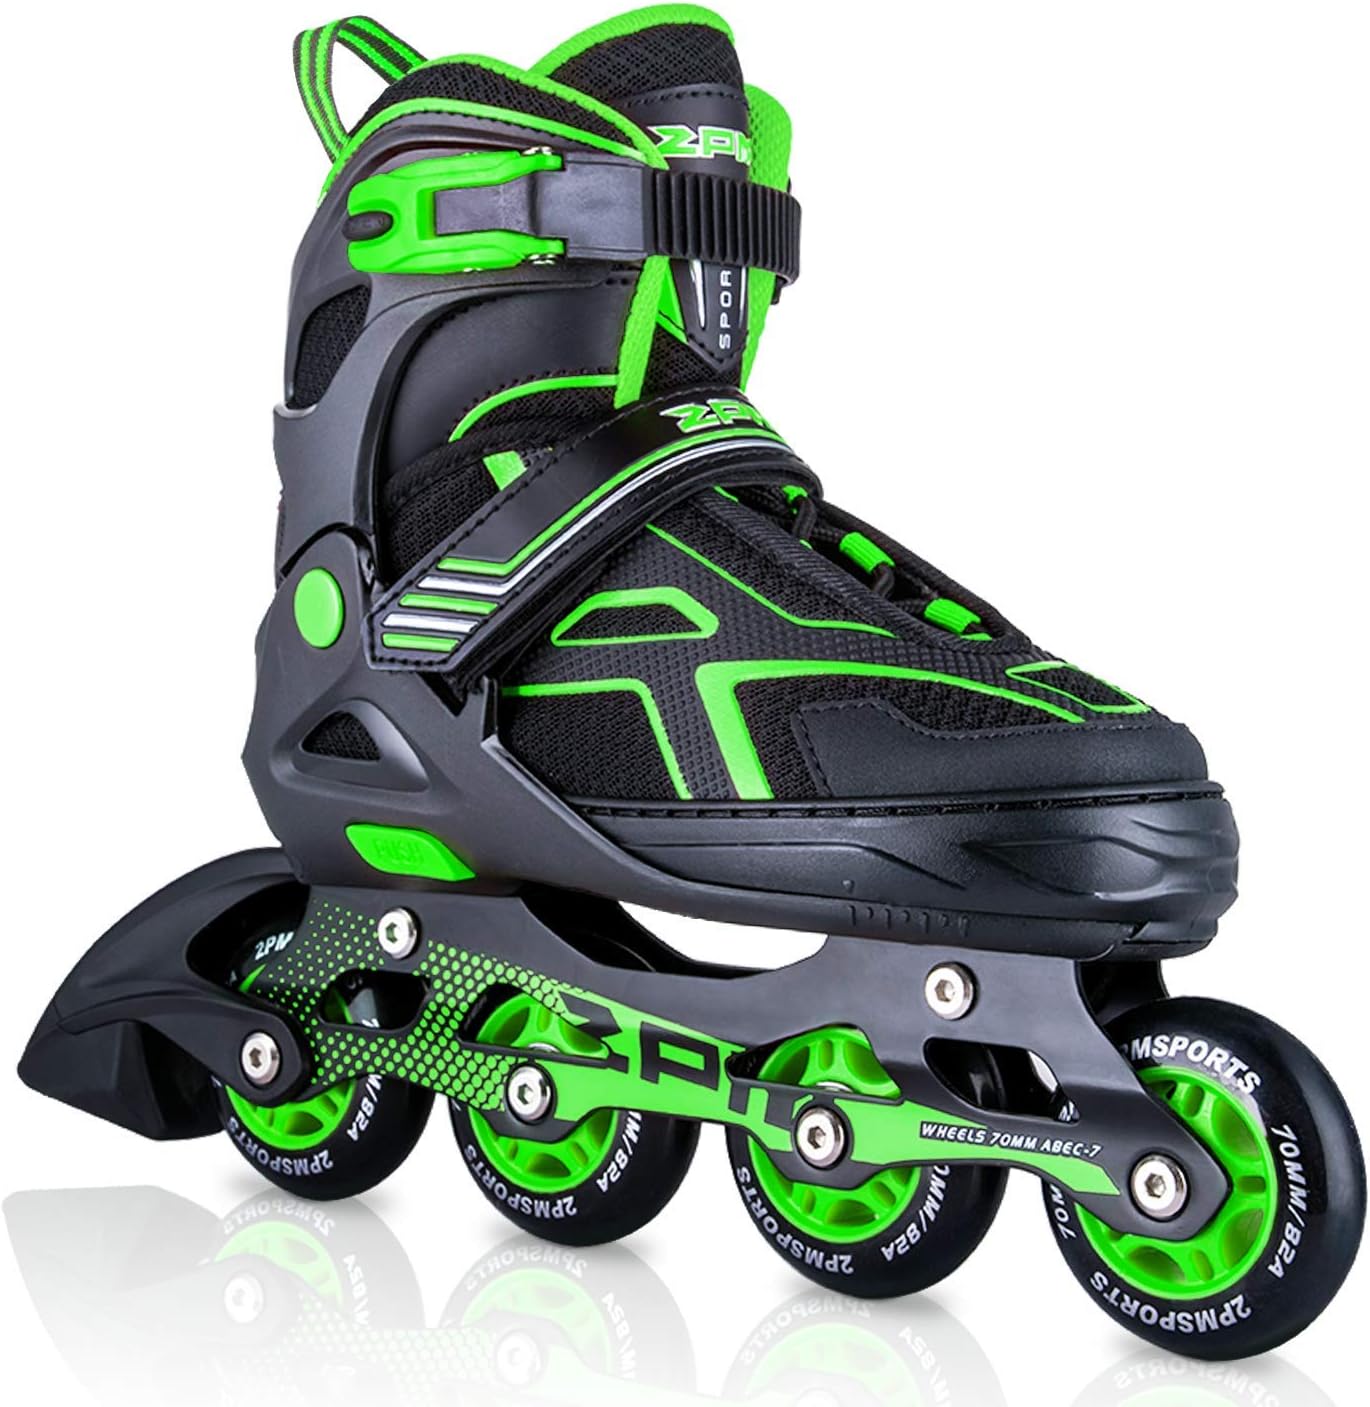 2PM SPORTS Torinx Green Boys Adjustable Inline Skates, Fun Beginner Roller Skates for Kids, Youth, Girls, Men and Women